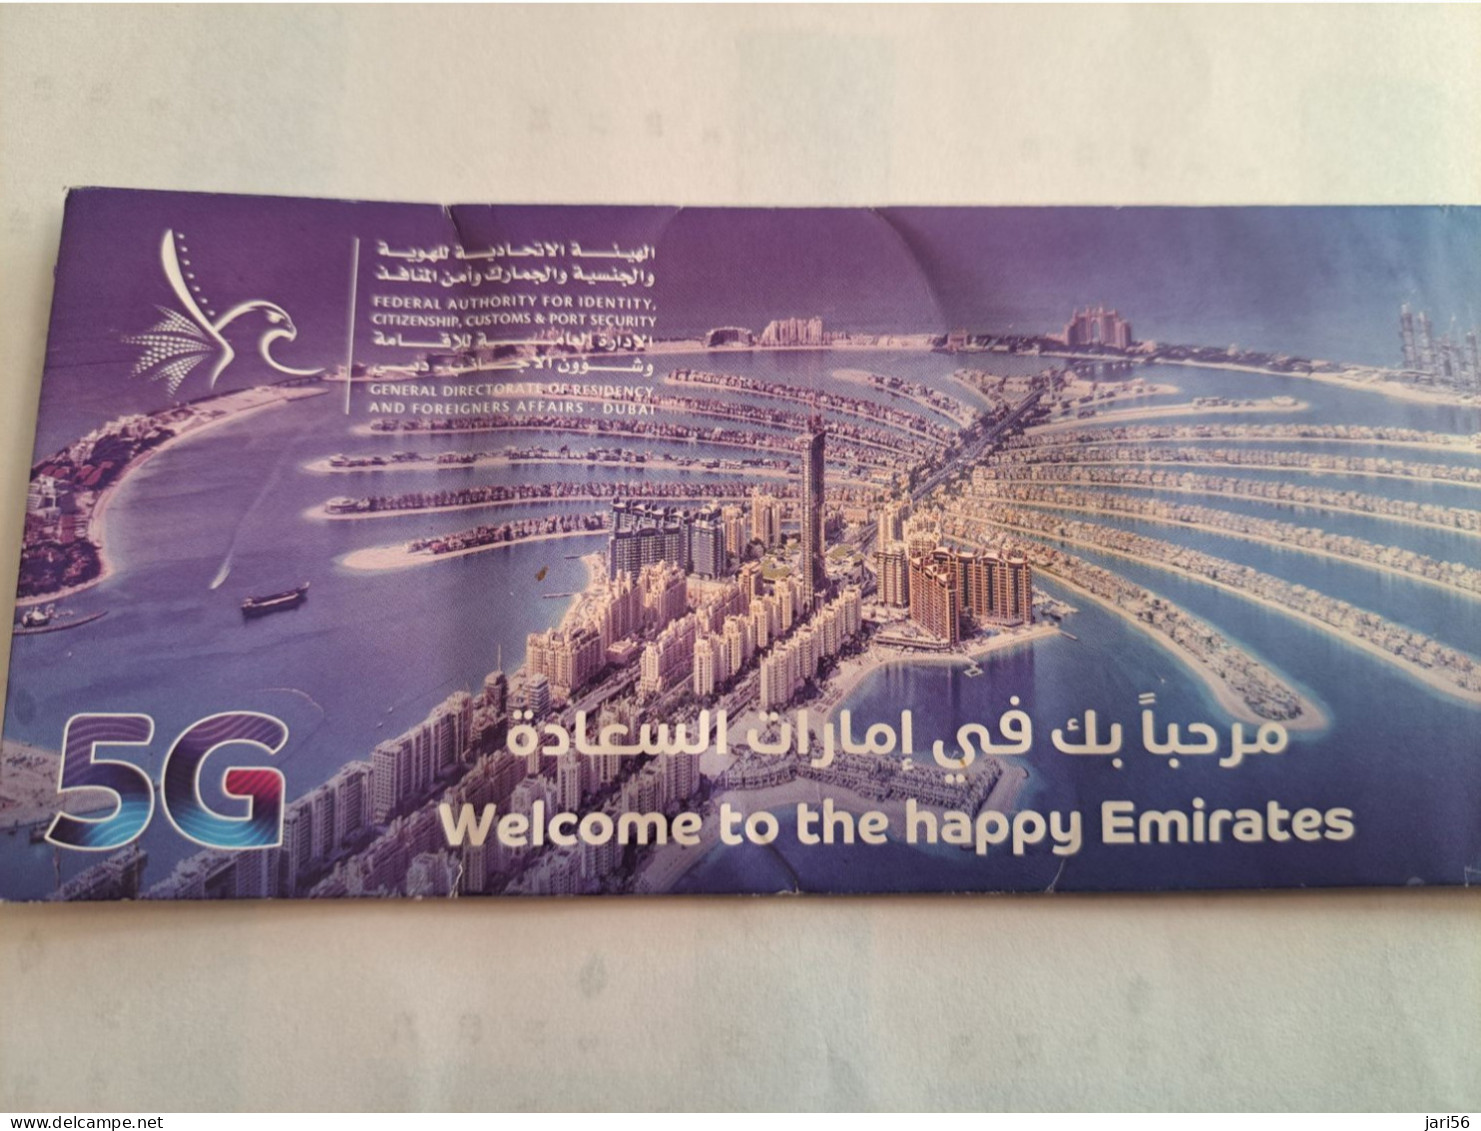 UNITED ARAB EMIRATES / SIM GSM CARD/ - United Arab Emirates-G.S.M CARD- Tourist SIM  ** 16143** - Ver. Arab. Emirate